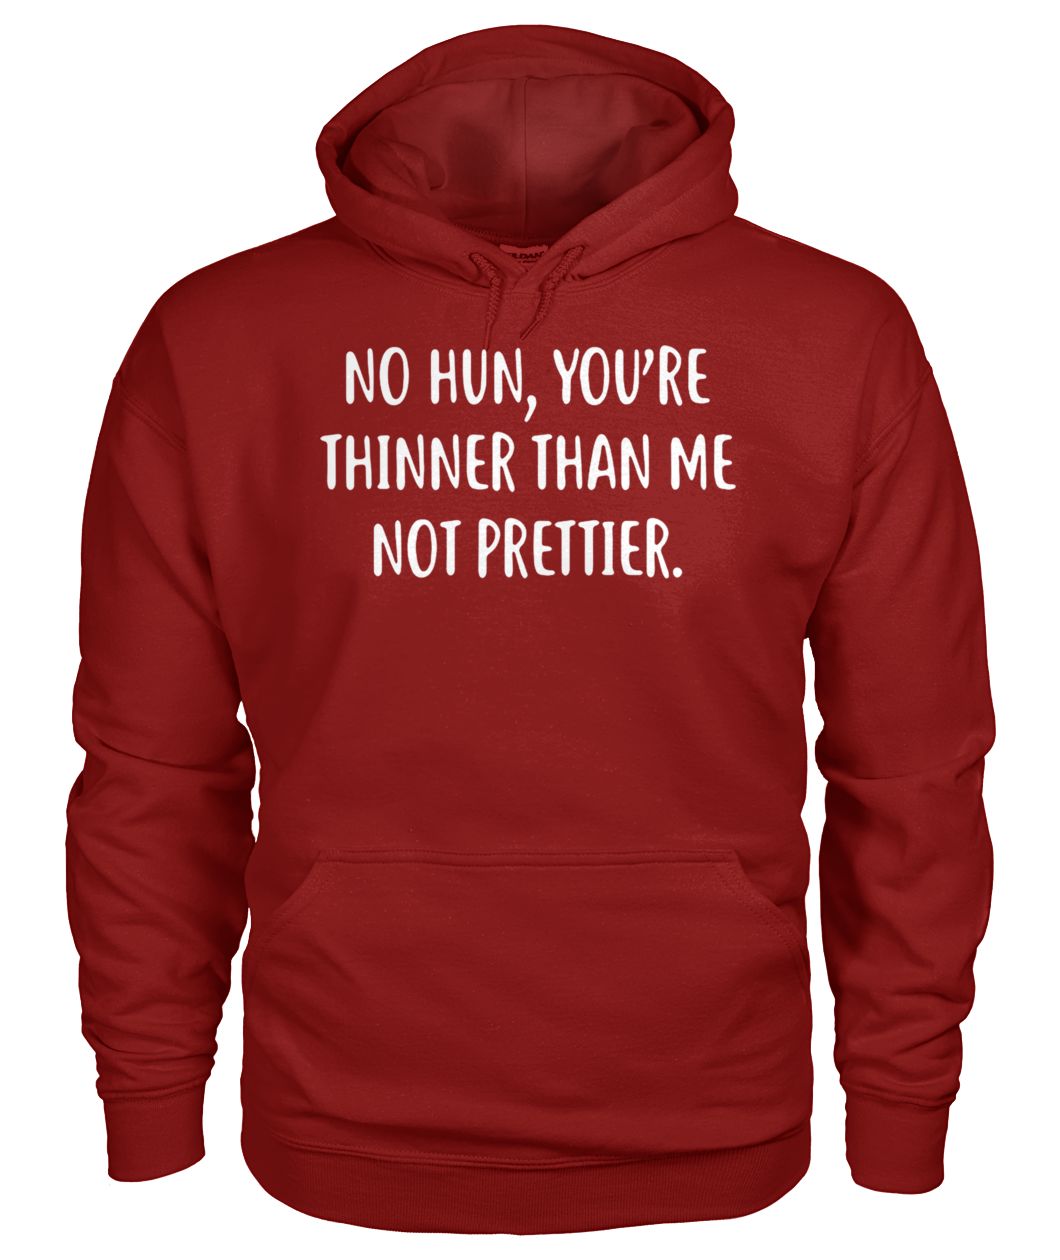 No hun you're thinner than me not prettier gildan hoodie